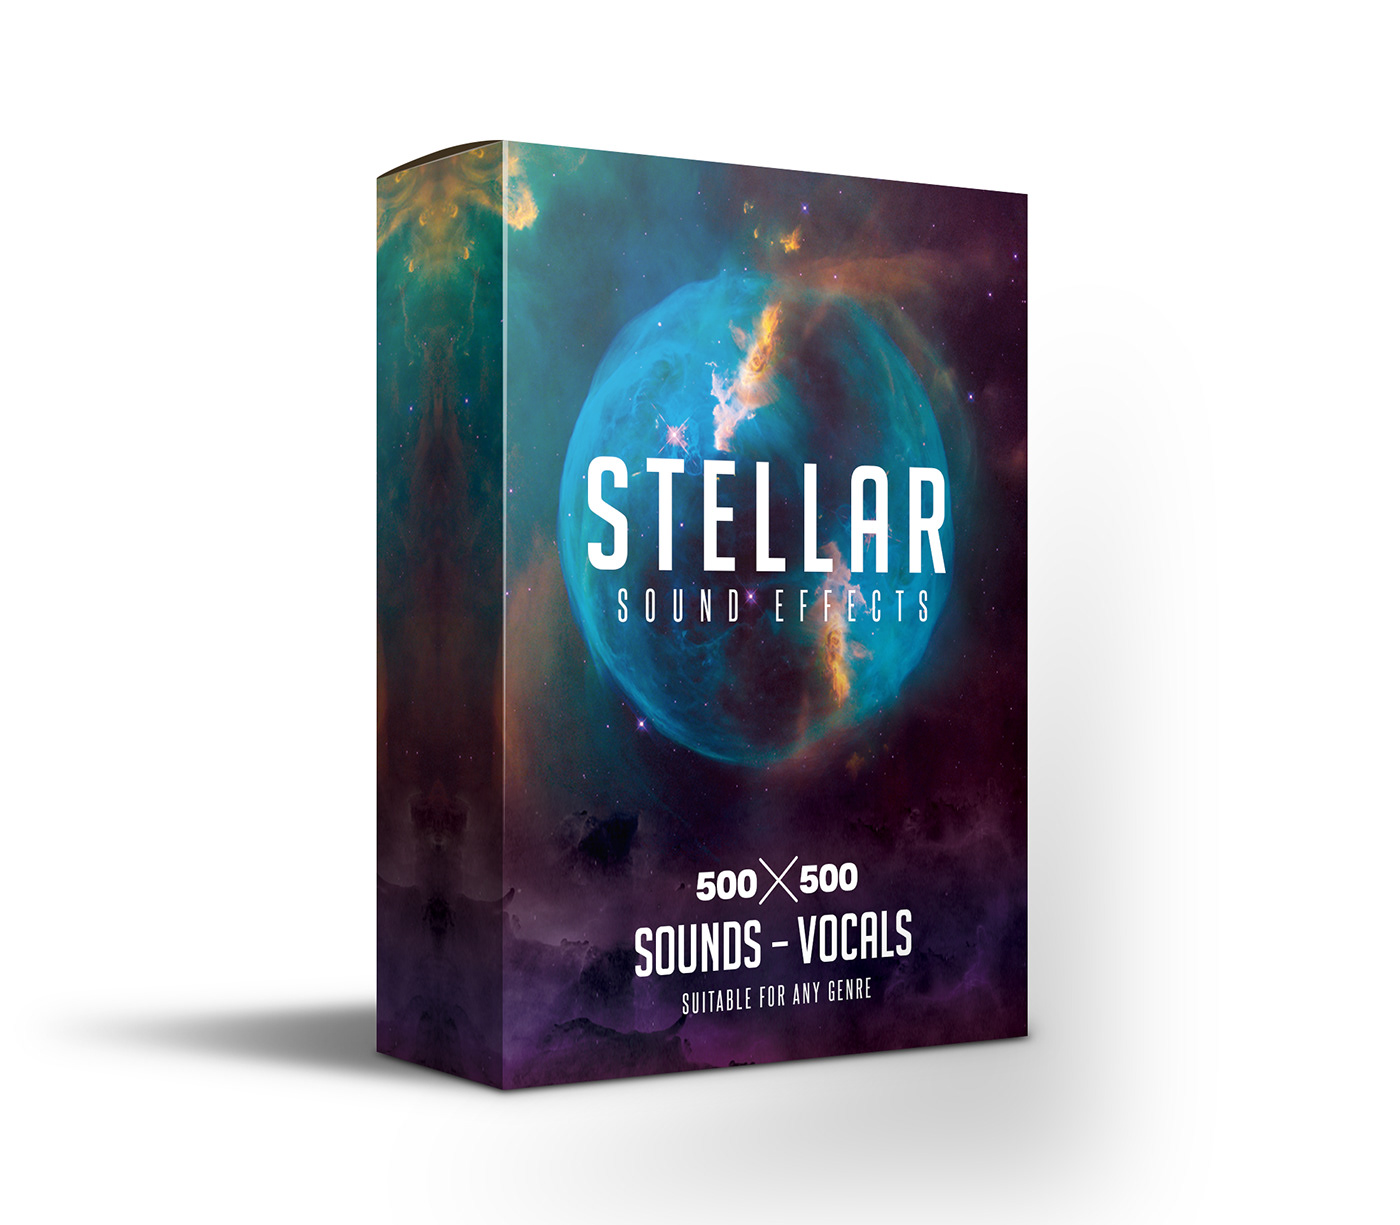 stellar music effects trap Music Production sound effects Sound library hip-hop Trap Music sound kit